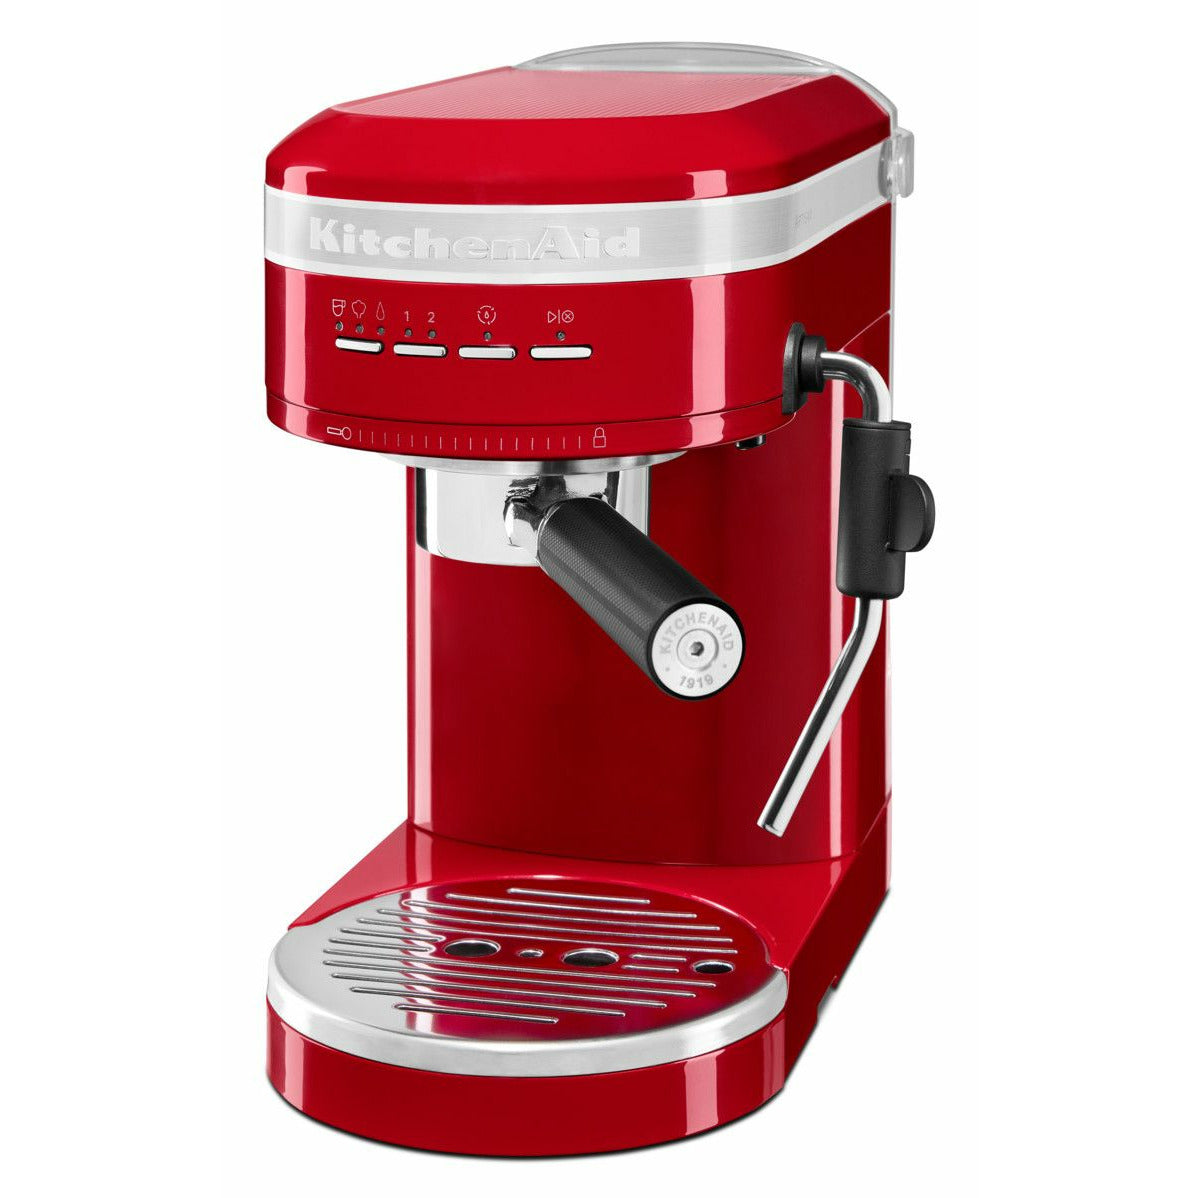 KitchenAid 5KES6503 Artisan Espresso Machine, Red